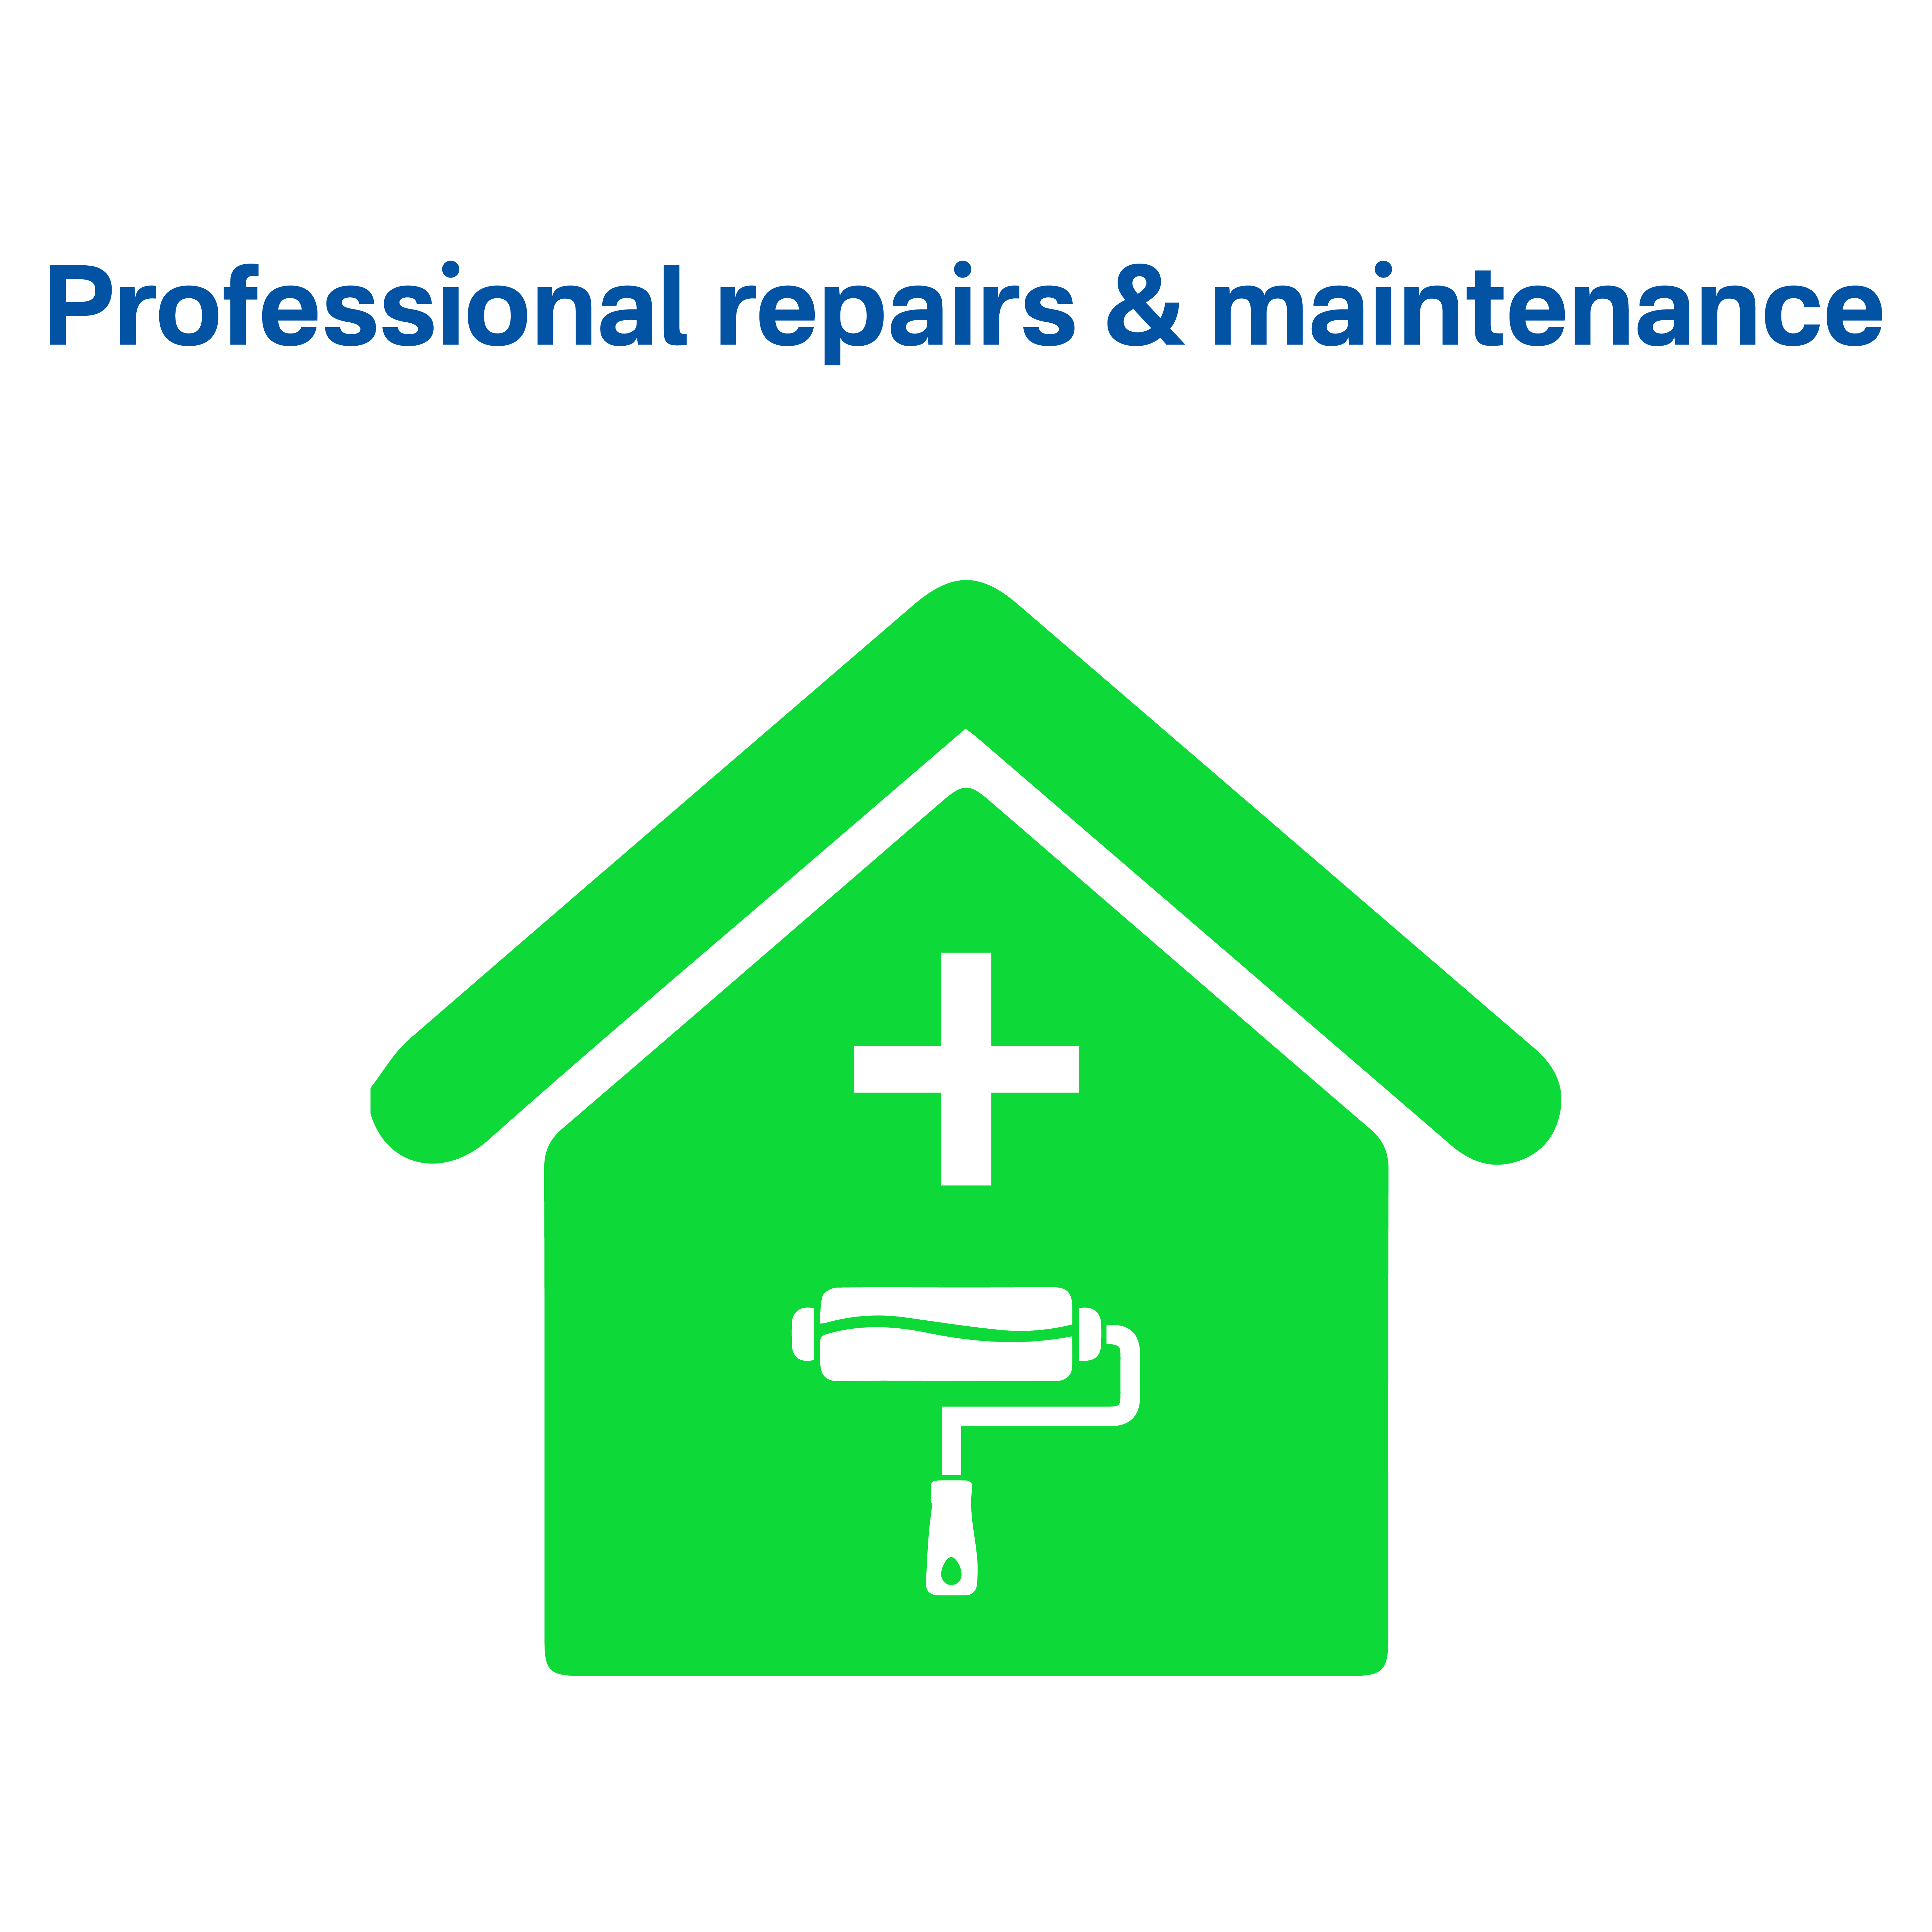 Professional repairs & maintenance